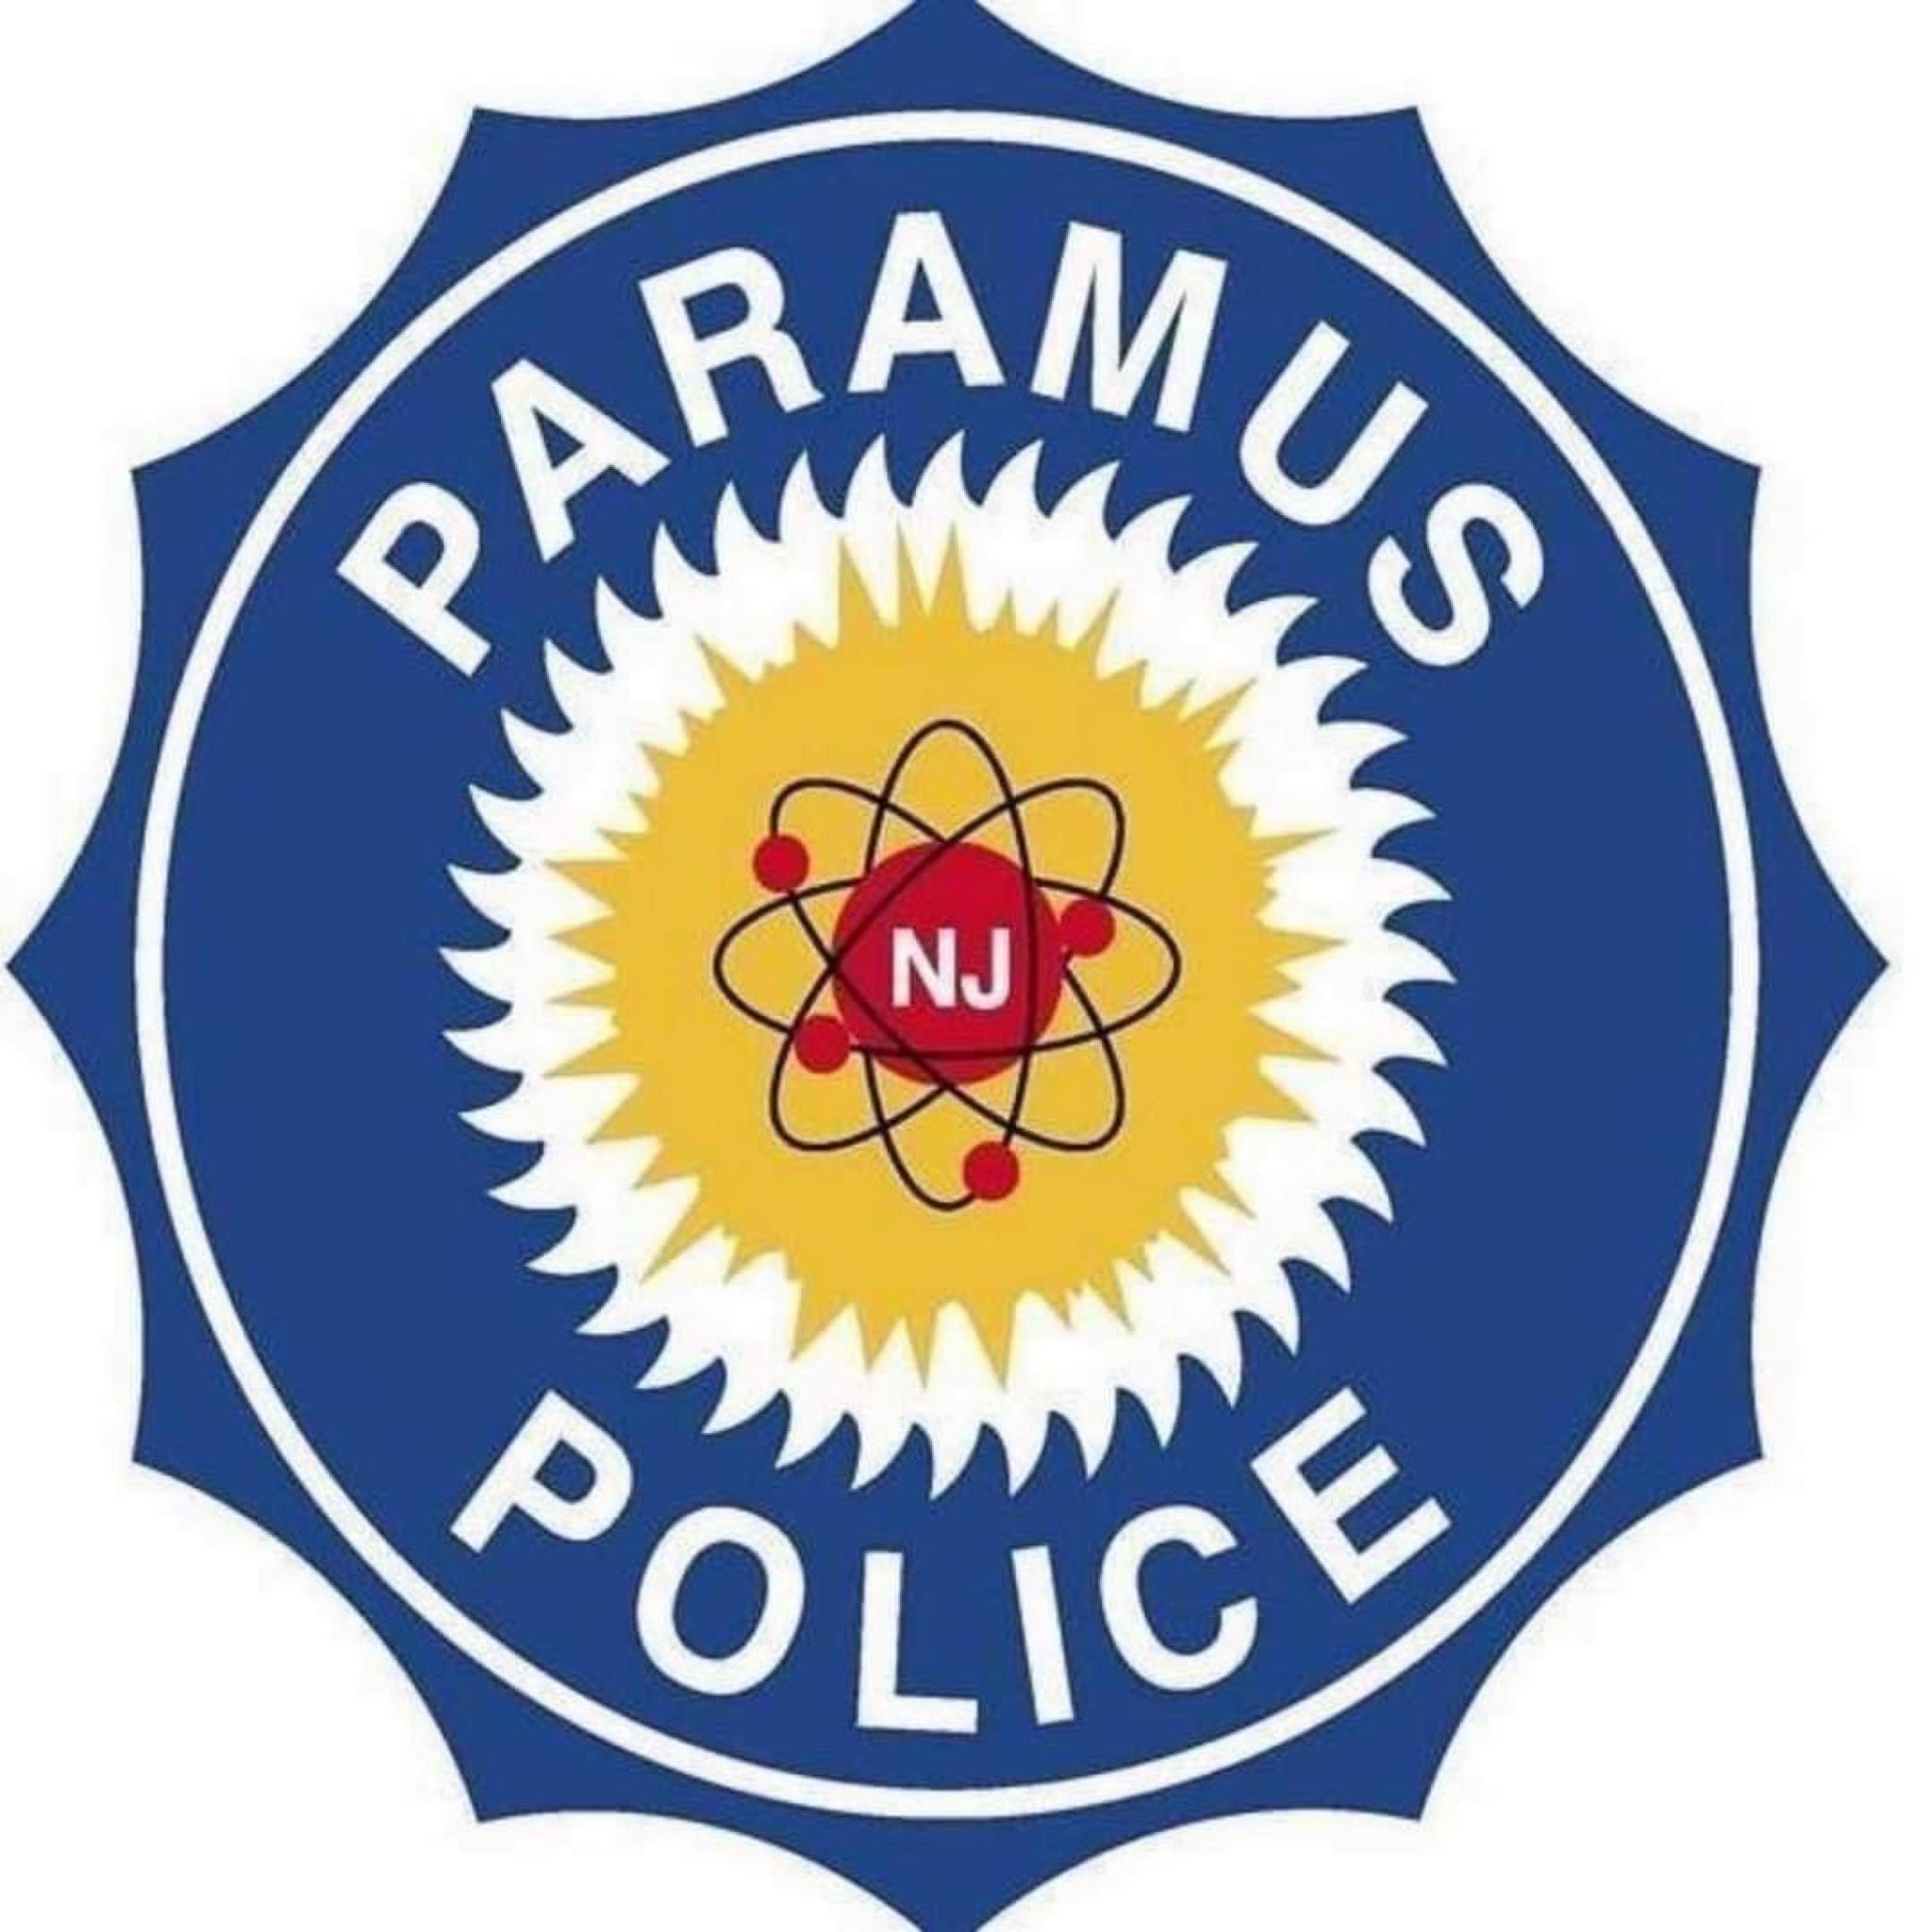 Paramus Police Department, NJ Police Jobs